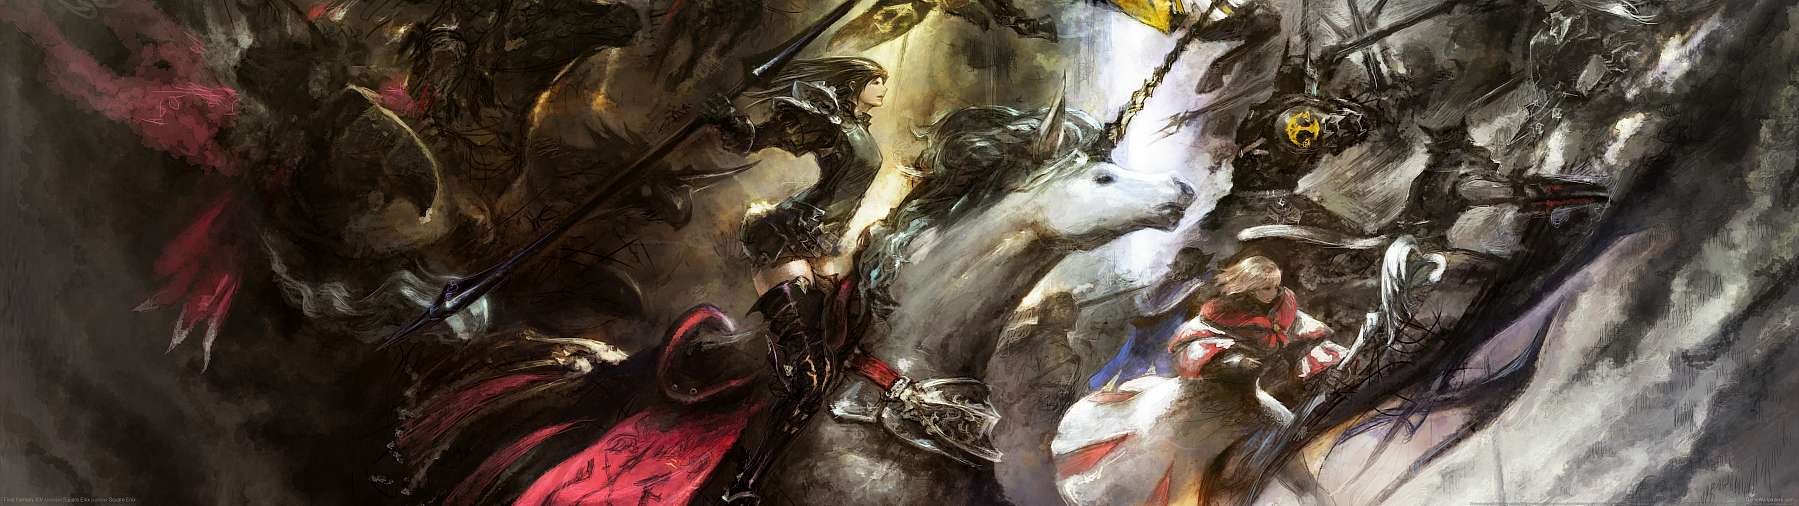 Final Fantasy XIV superwide achtergrond 03